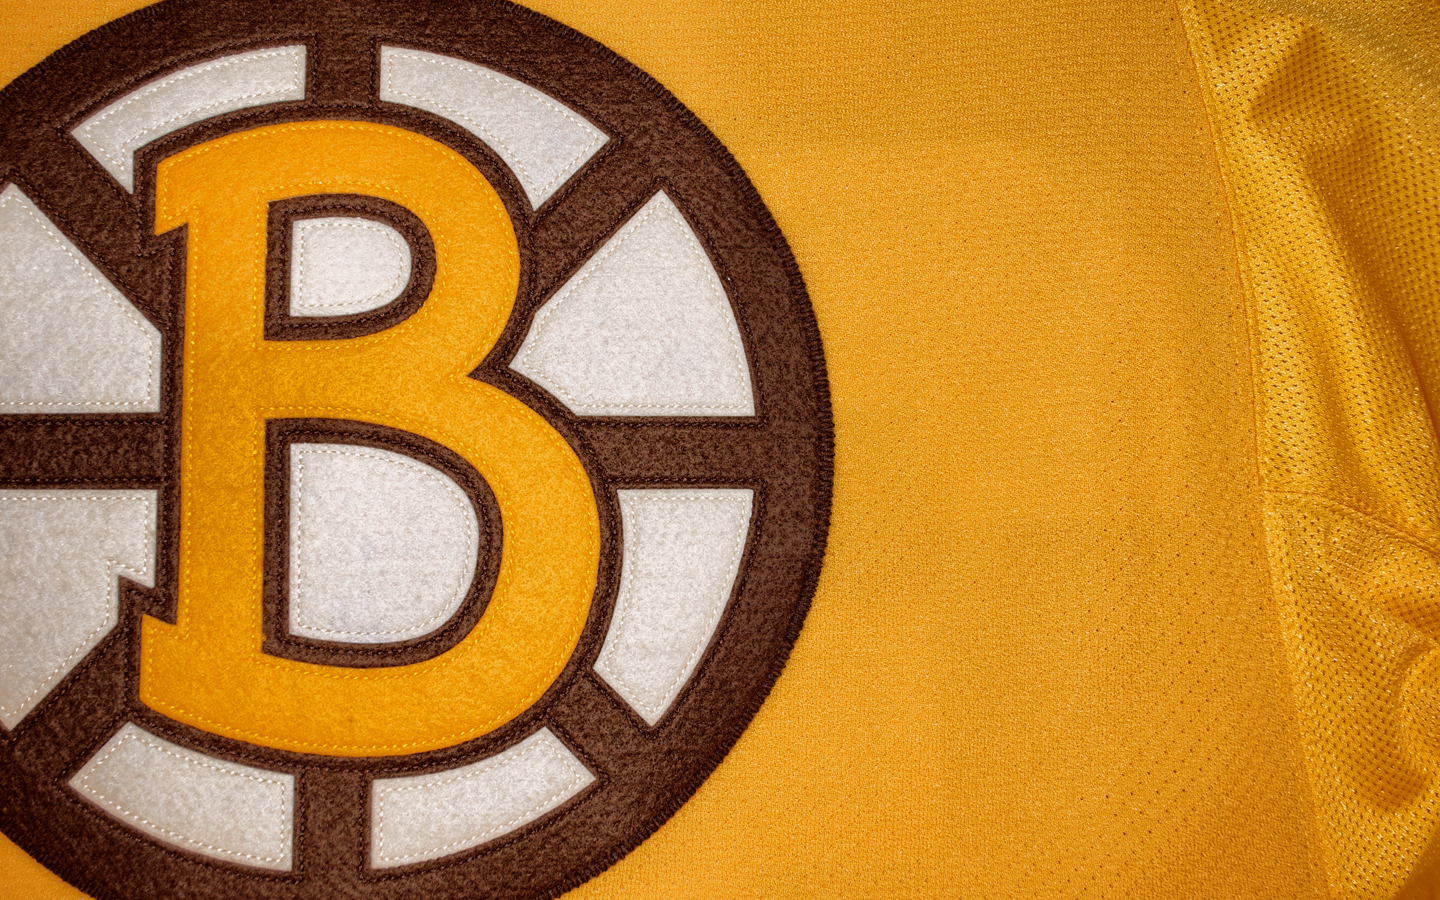 Boston Bruins Zoom Background